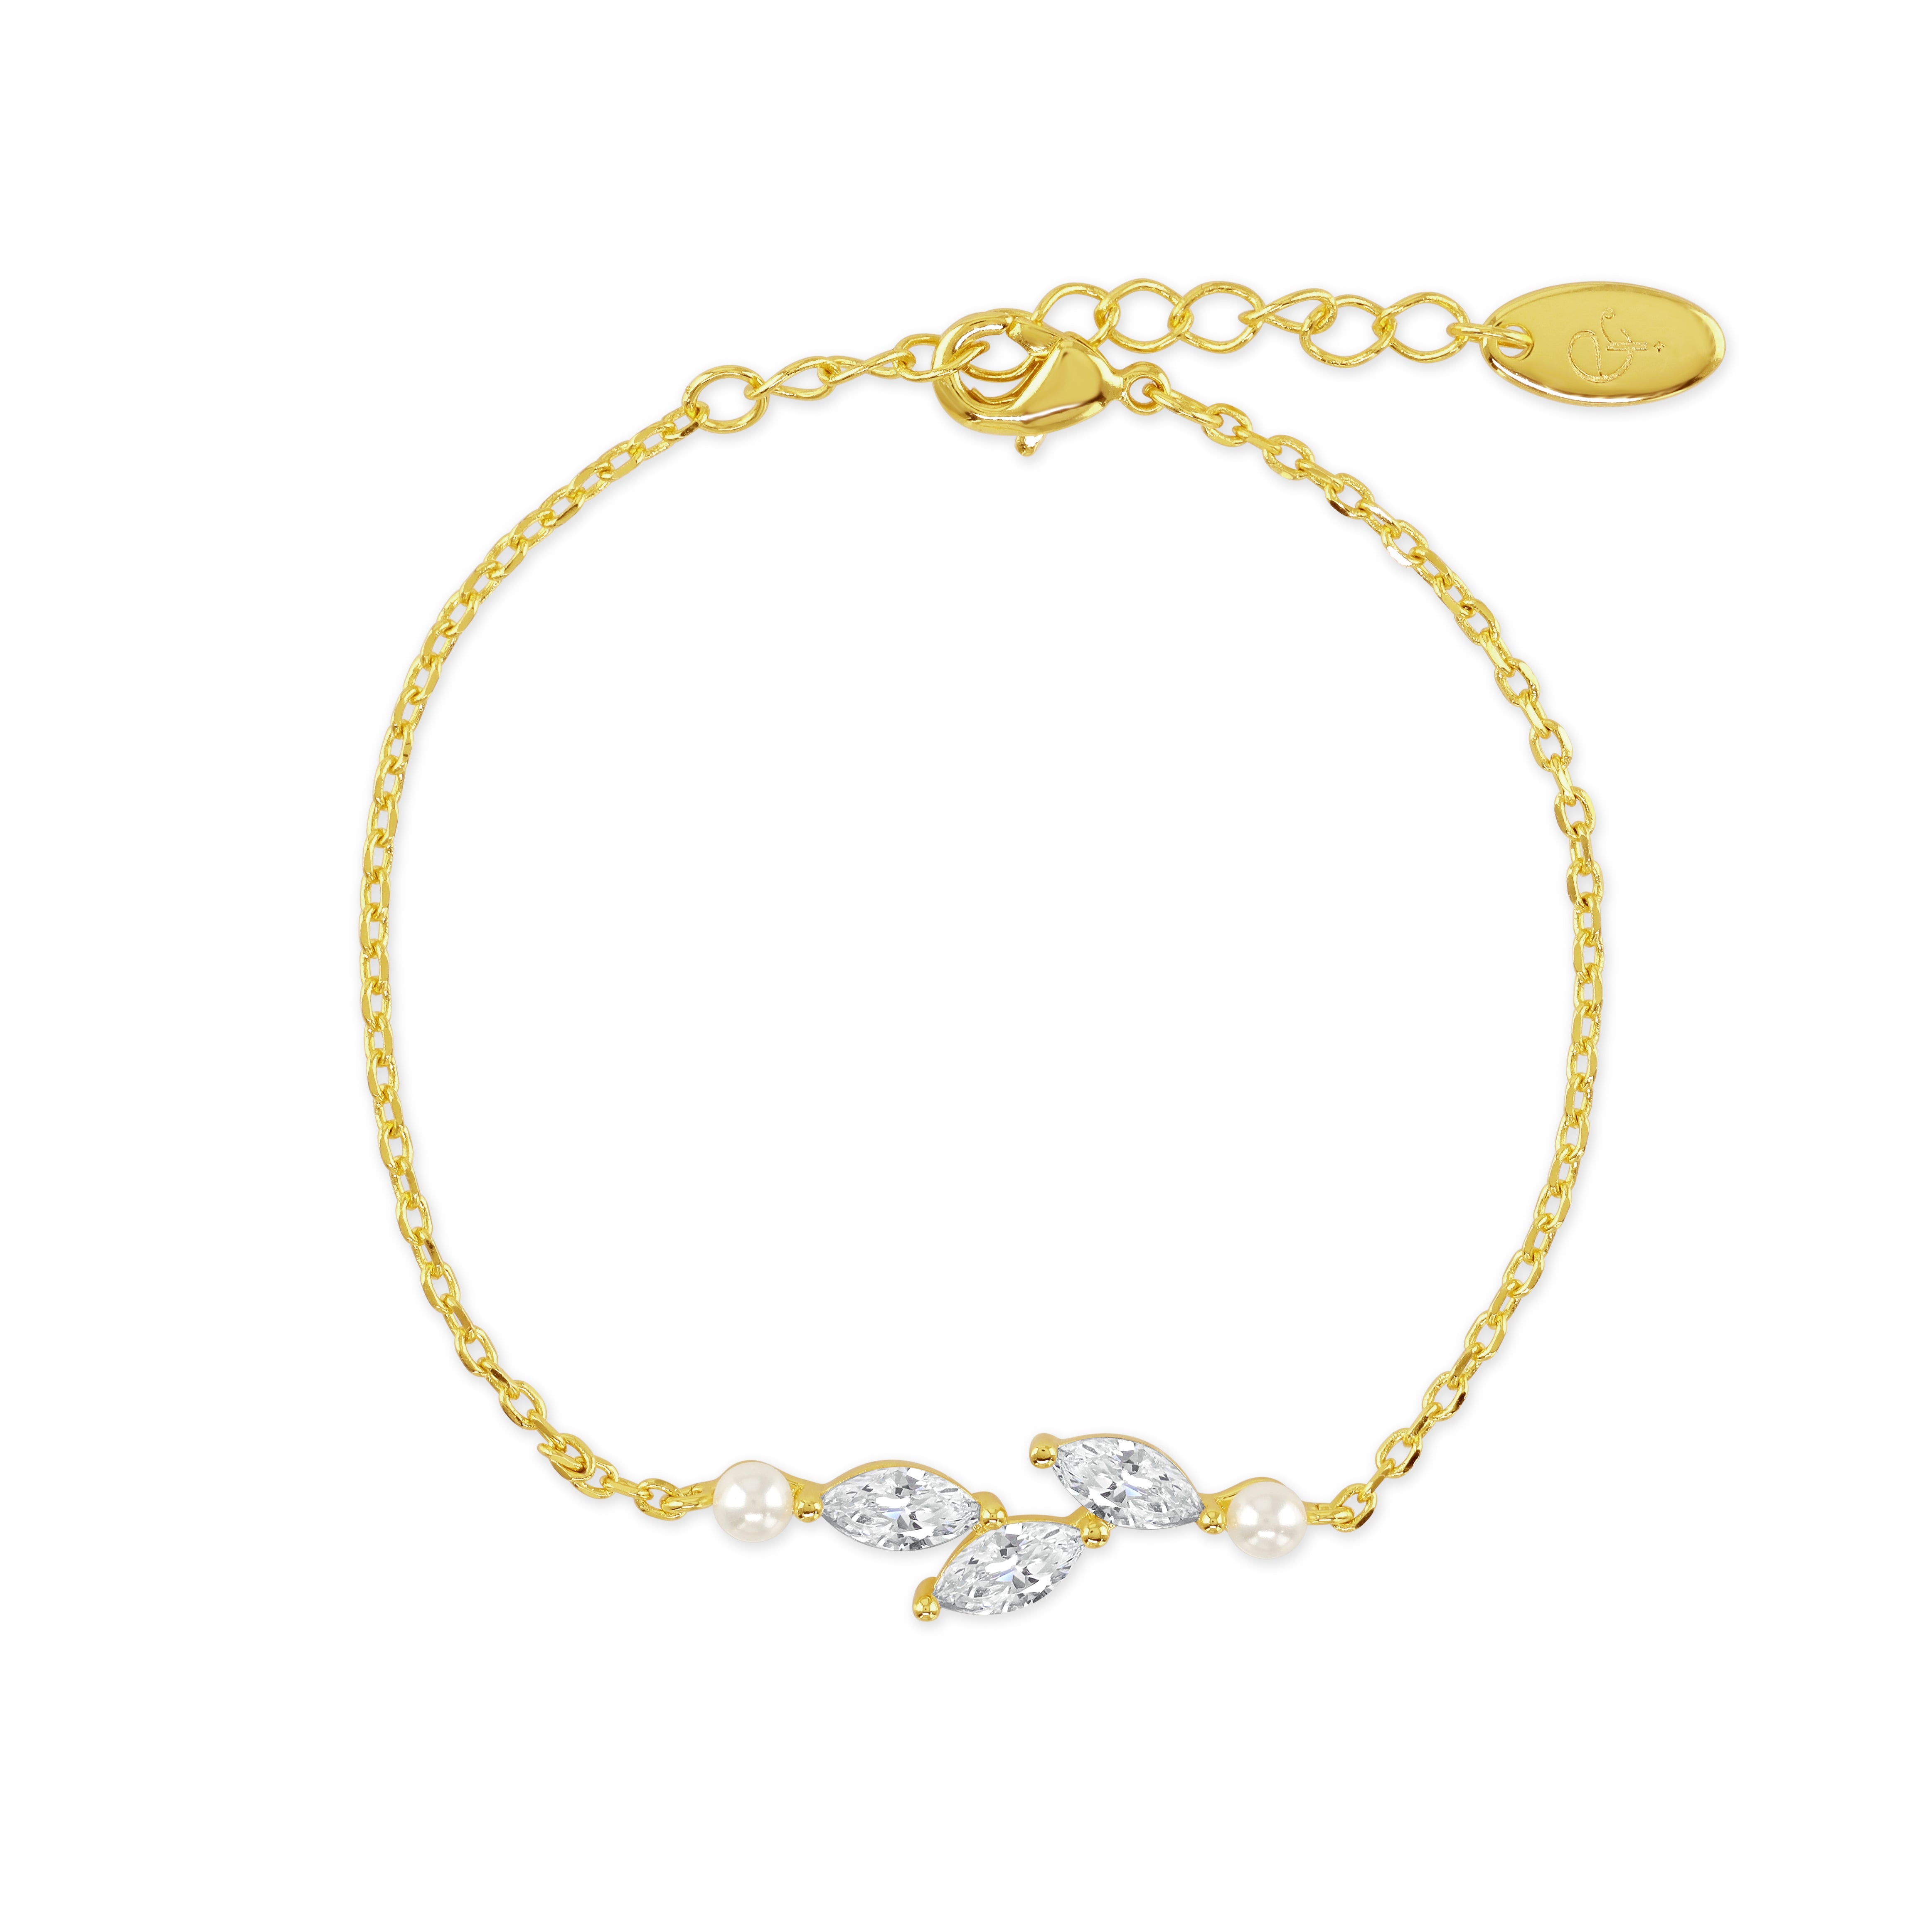 ERYN BRACELET // Gold dainty pearl and cz bracelet